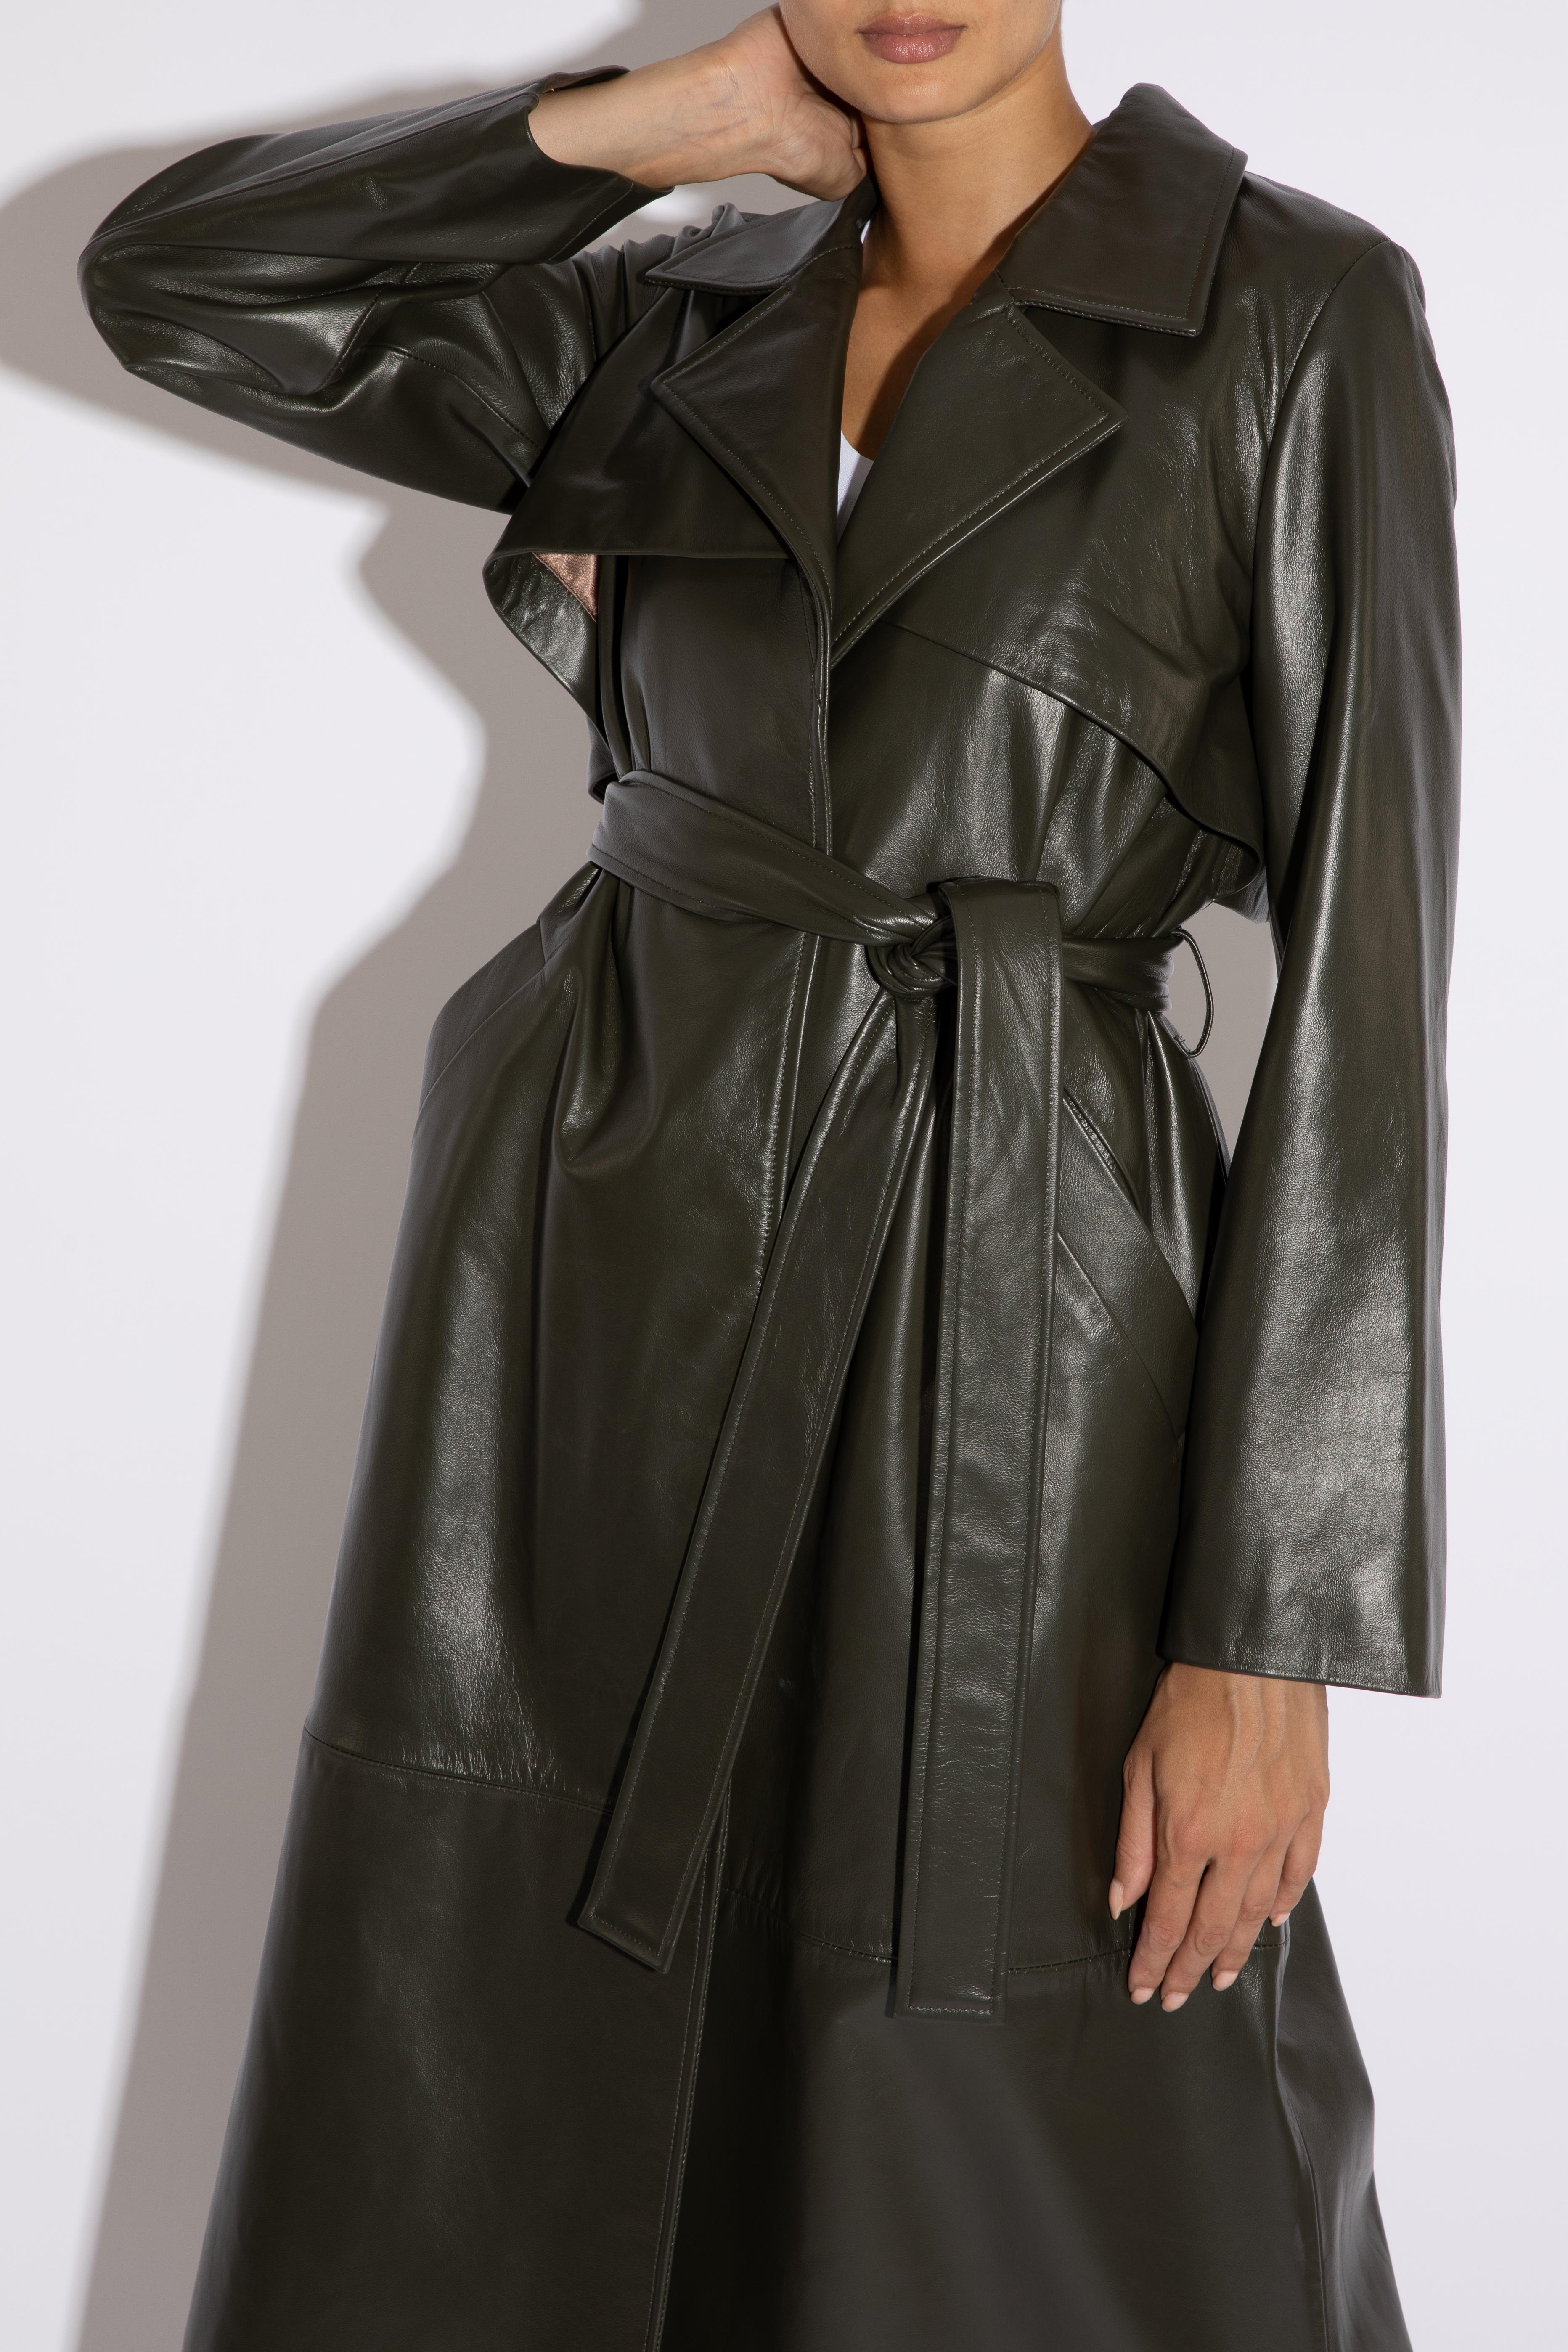 Verheyen London Leather Trench Coat in Dark Khaki Green - Size uk 16 For Sale 2